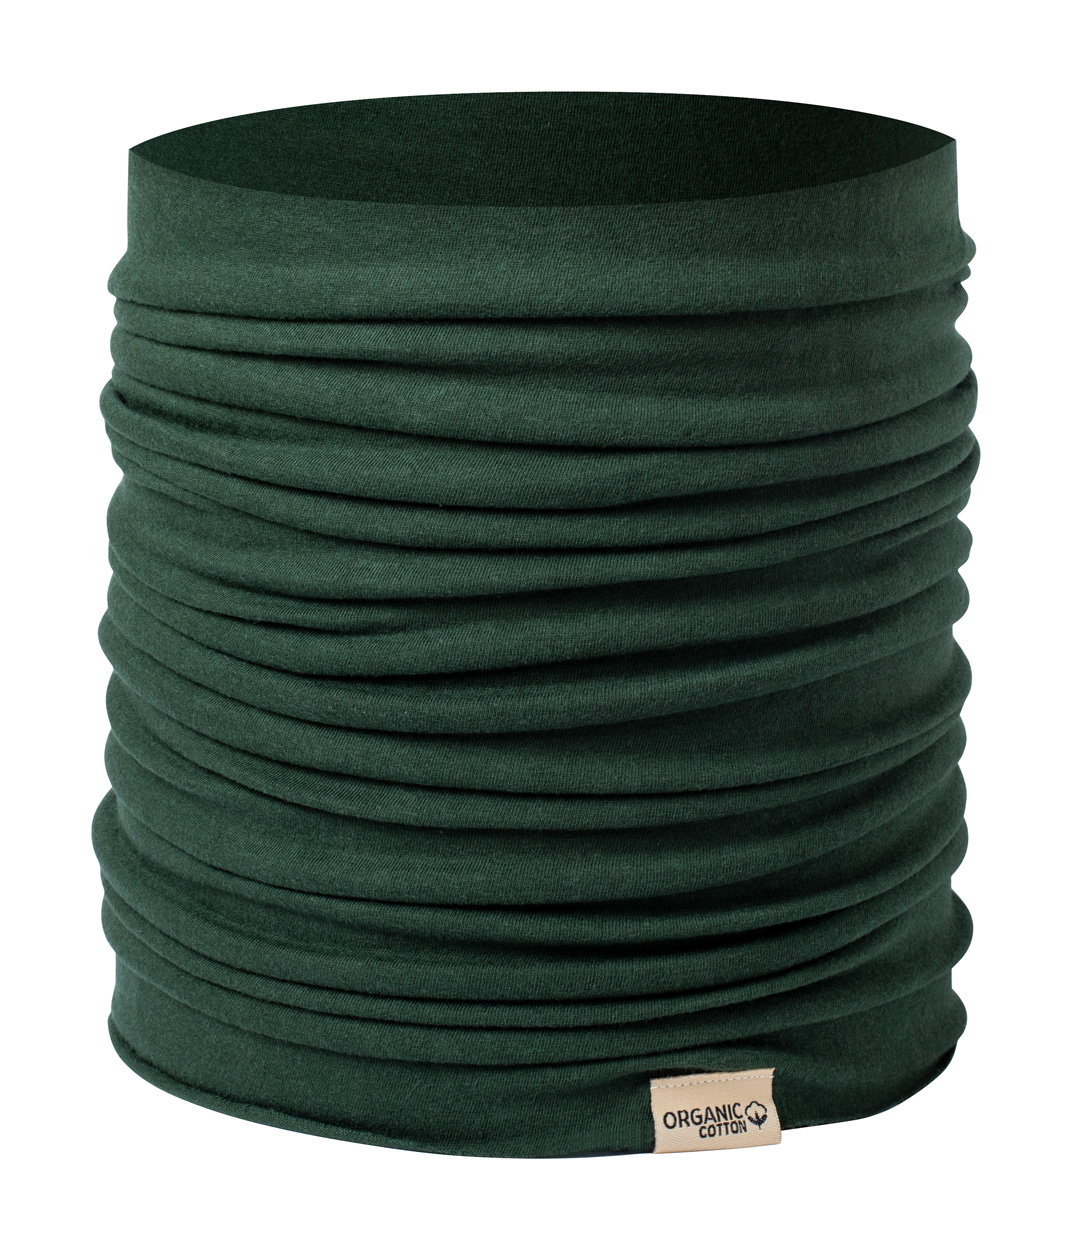 Omega multipurpose scarf - green